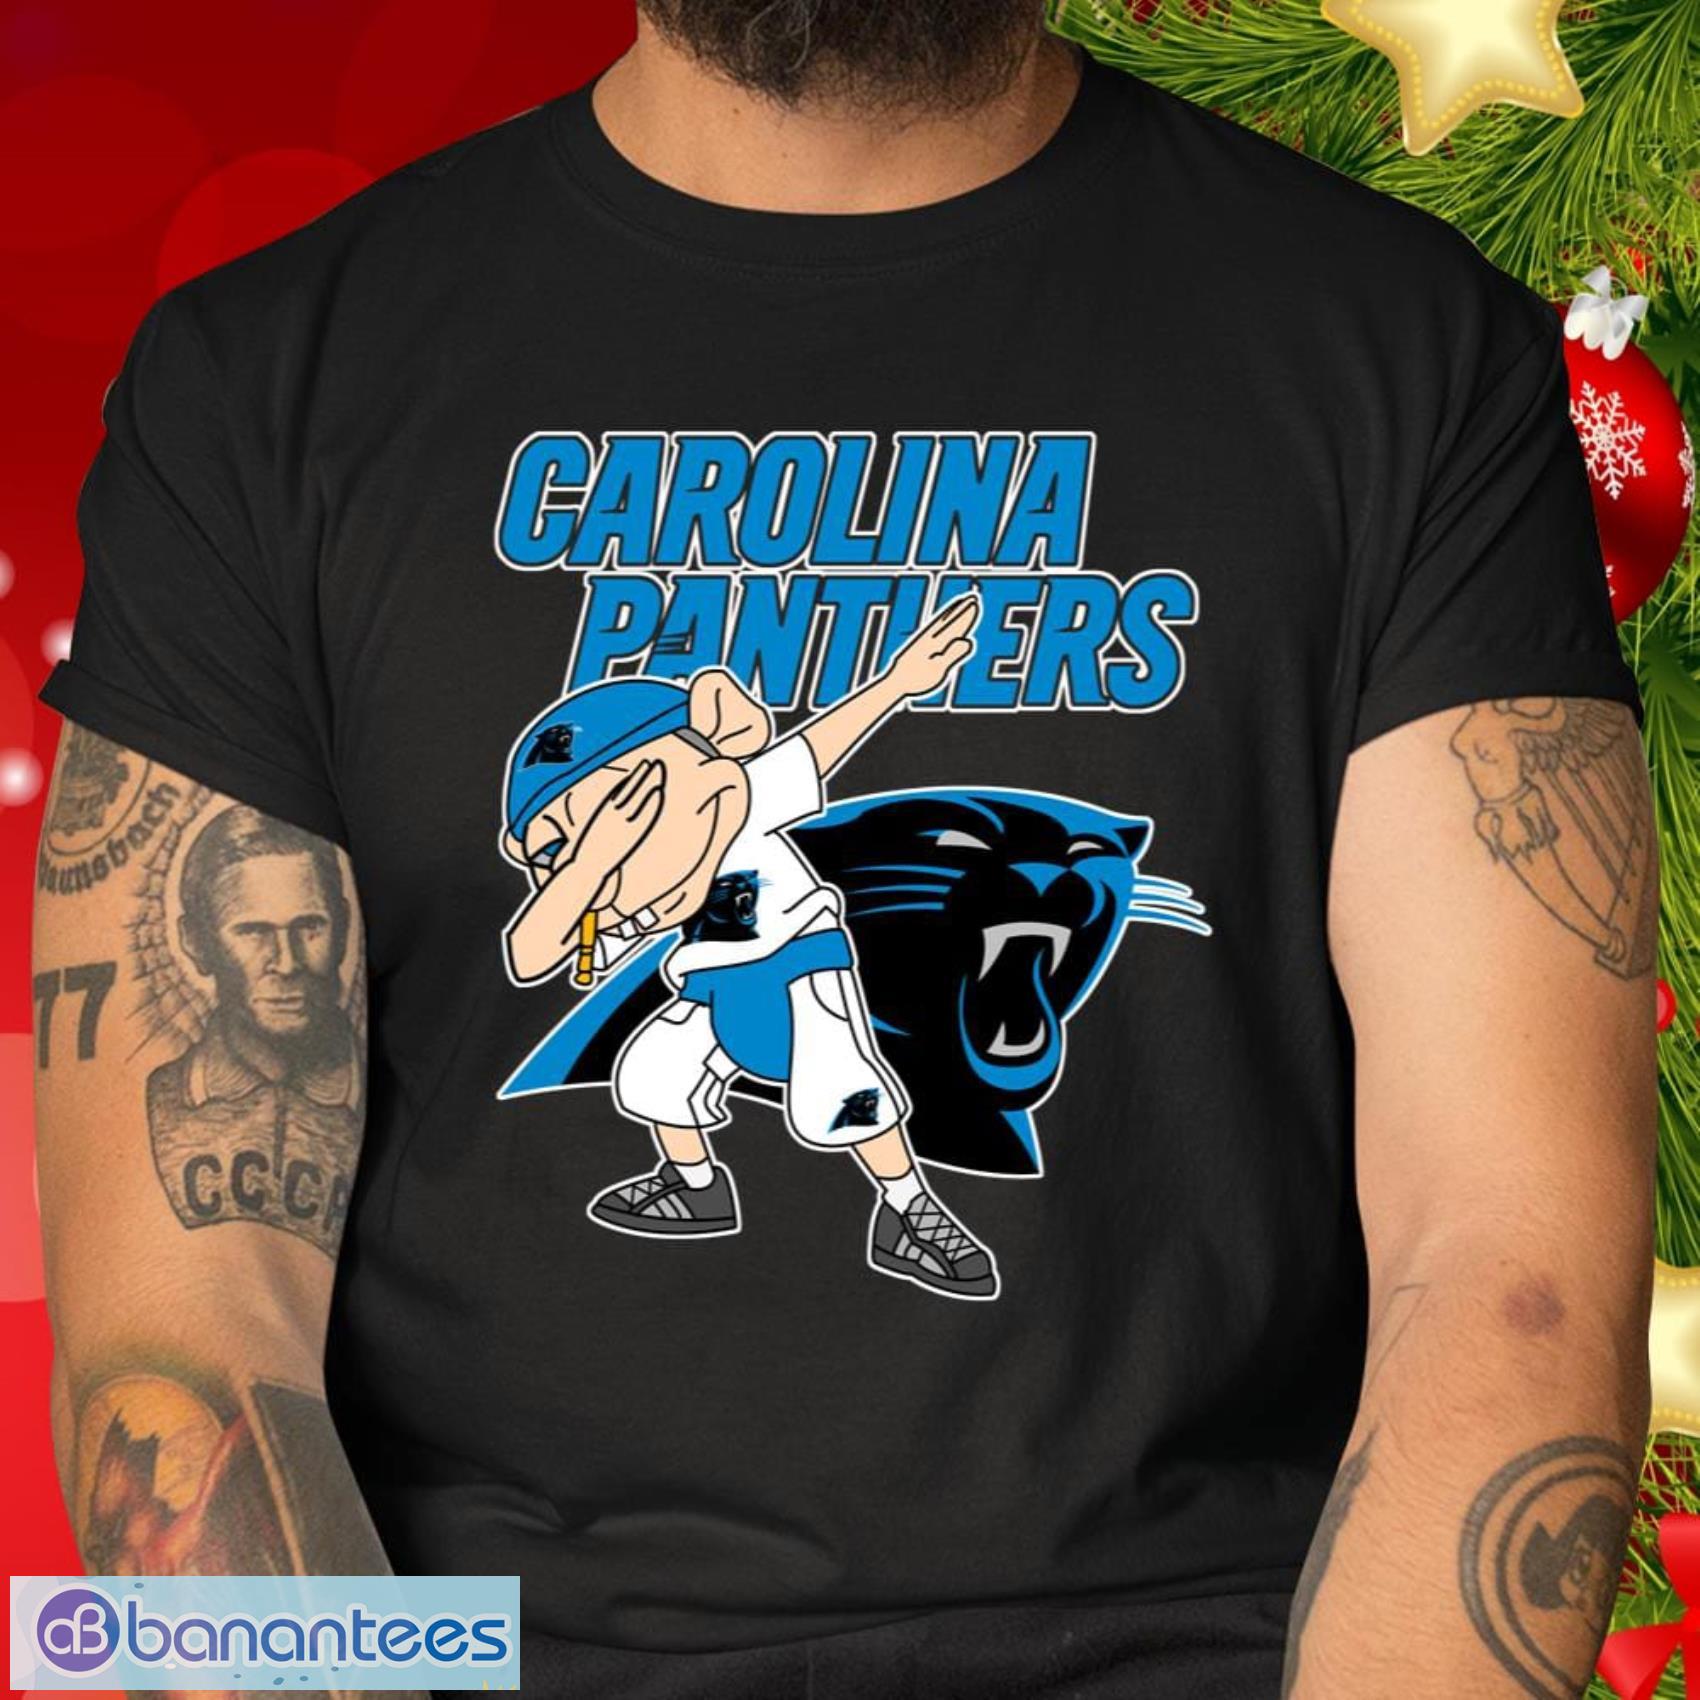 Carolina Panthers NFL Football Gift Fr Fans Jeffy Dabbing Sports T Shirt - Carolina Panthers NFL Football Jeffy Dabbing Sports T Shirt_2